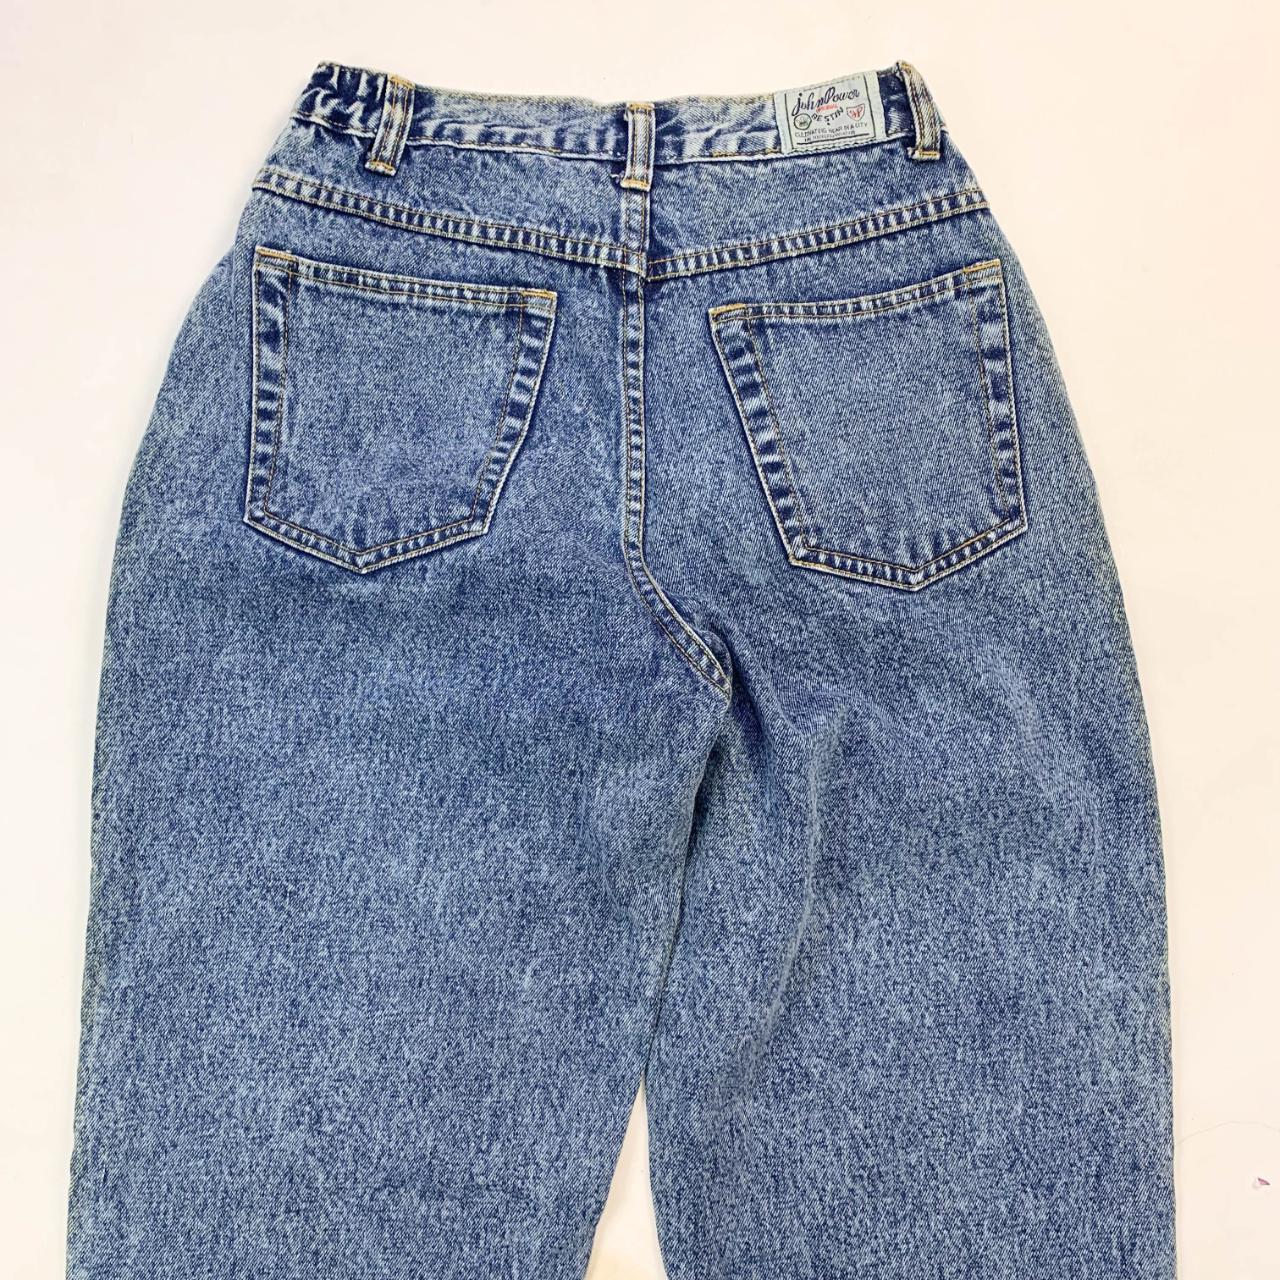 Unbranded Women's Blue Jeans (4)